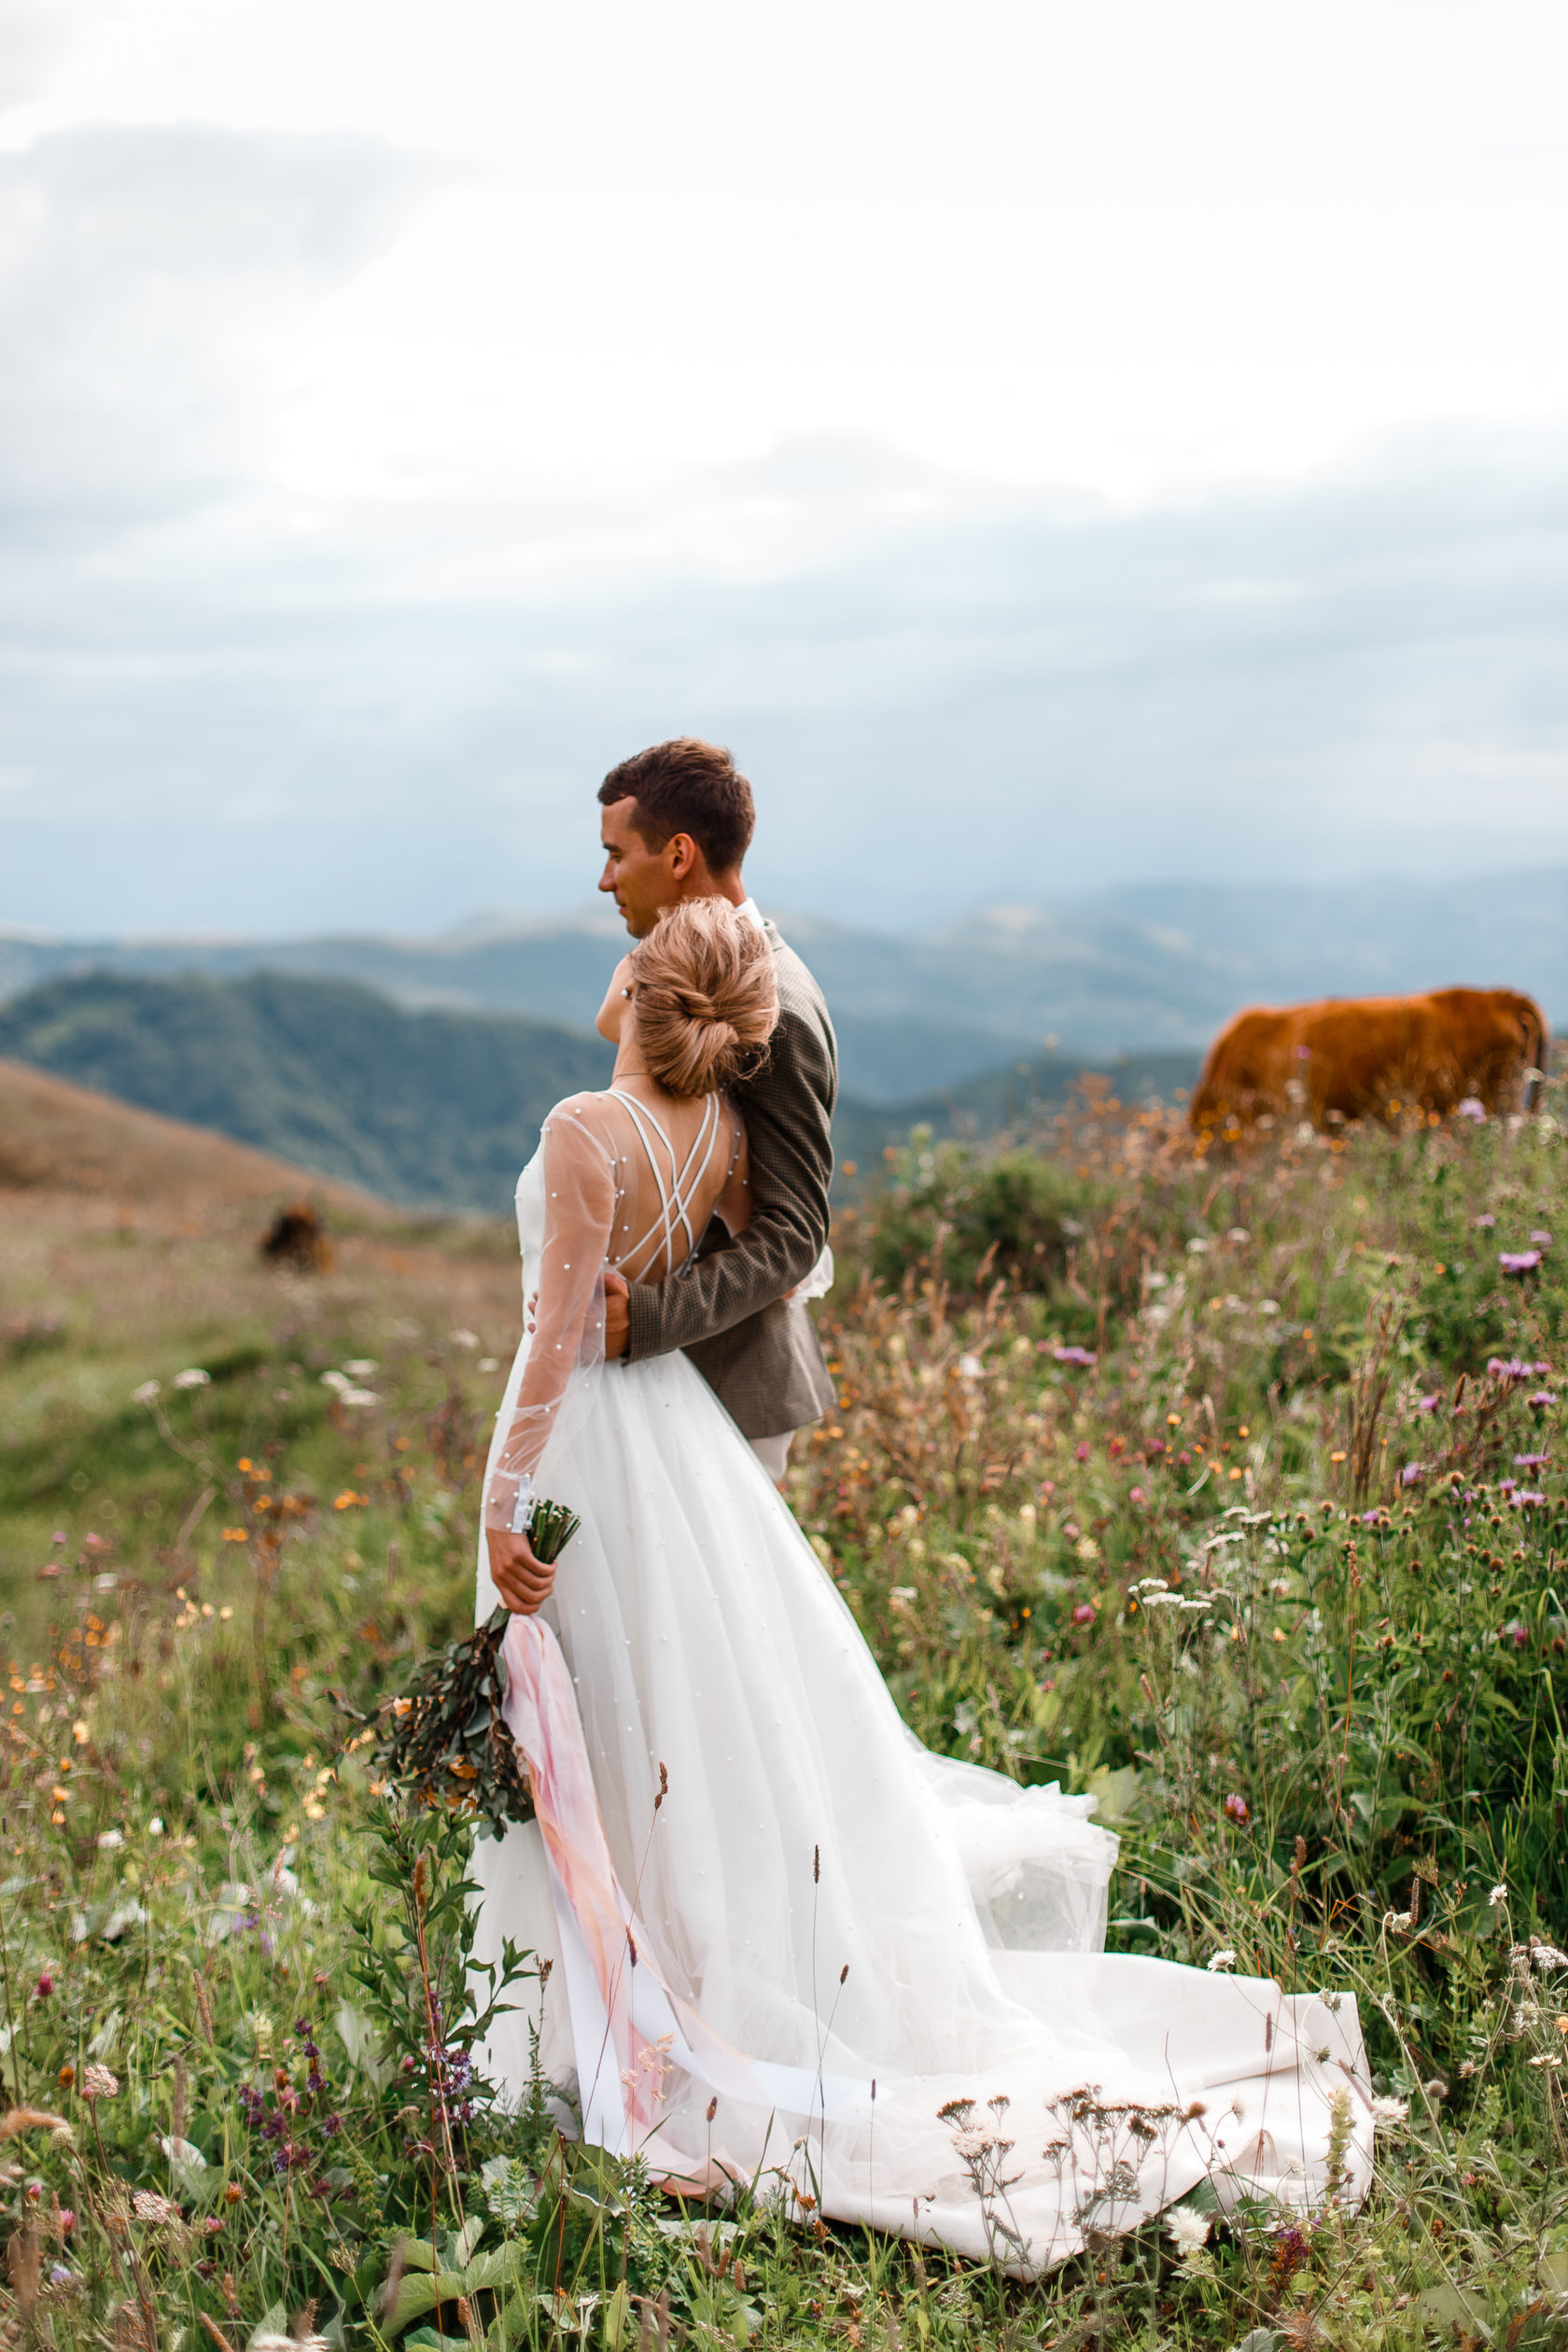 Свадьба в горах Кавказа